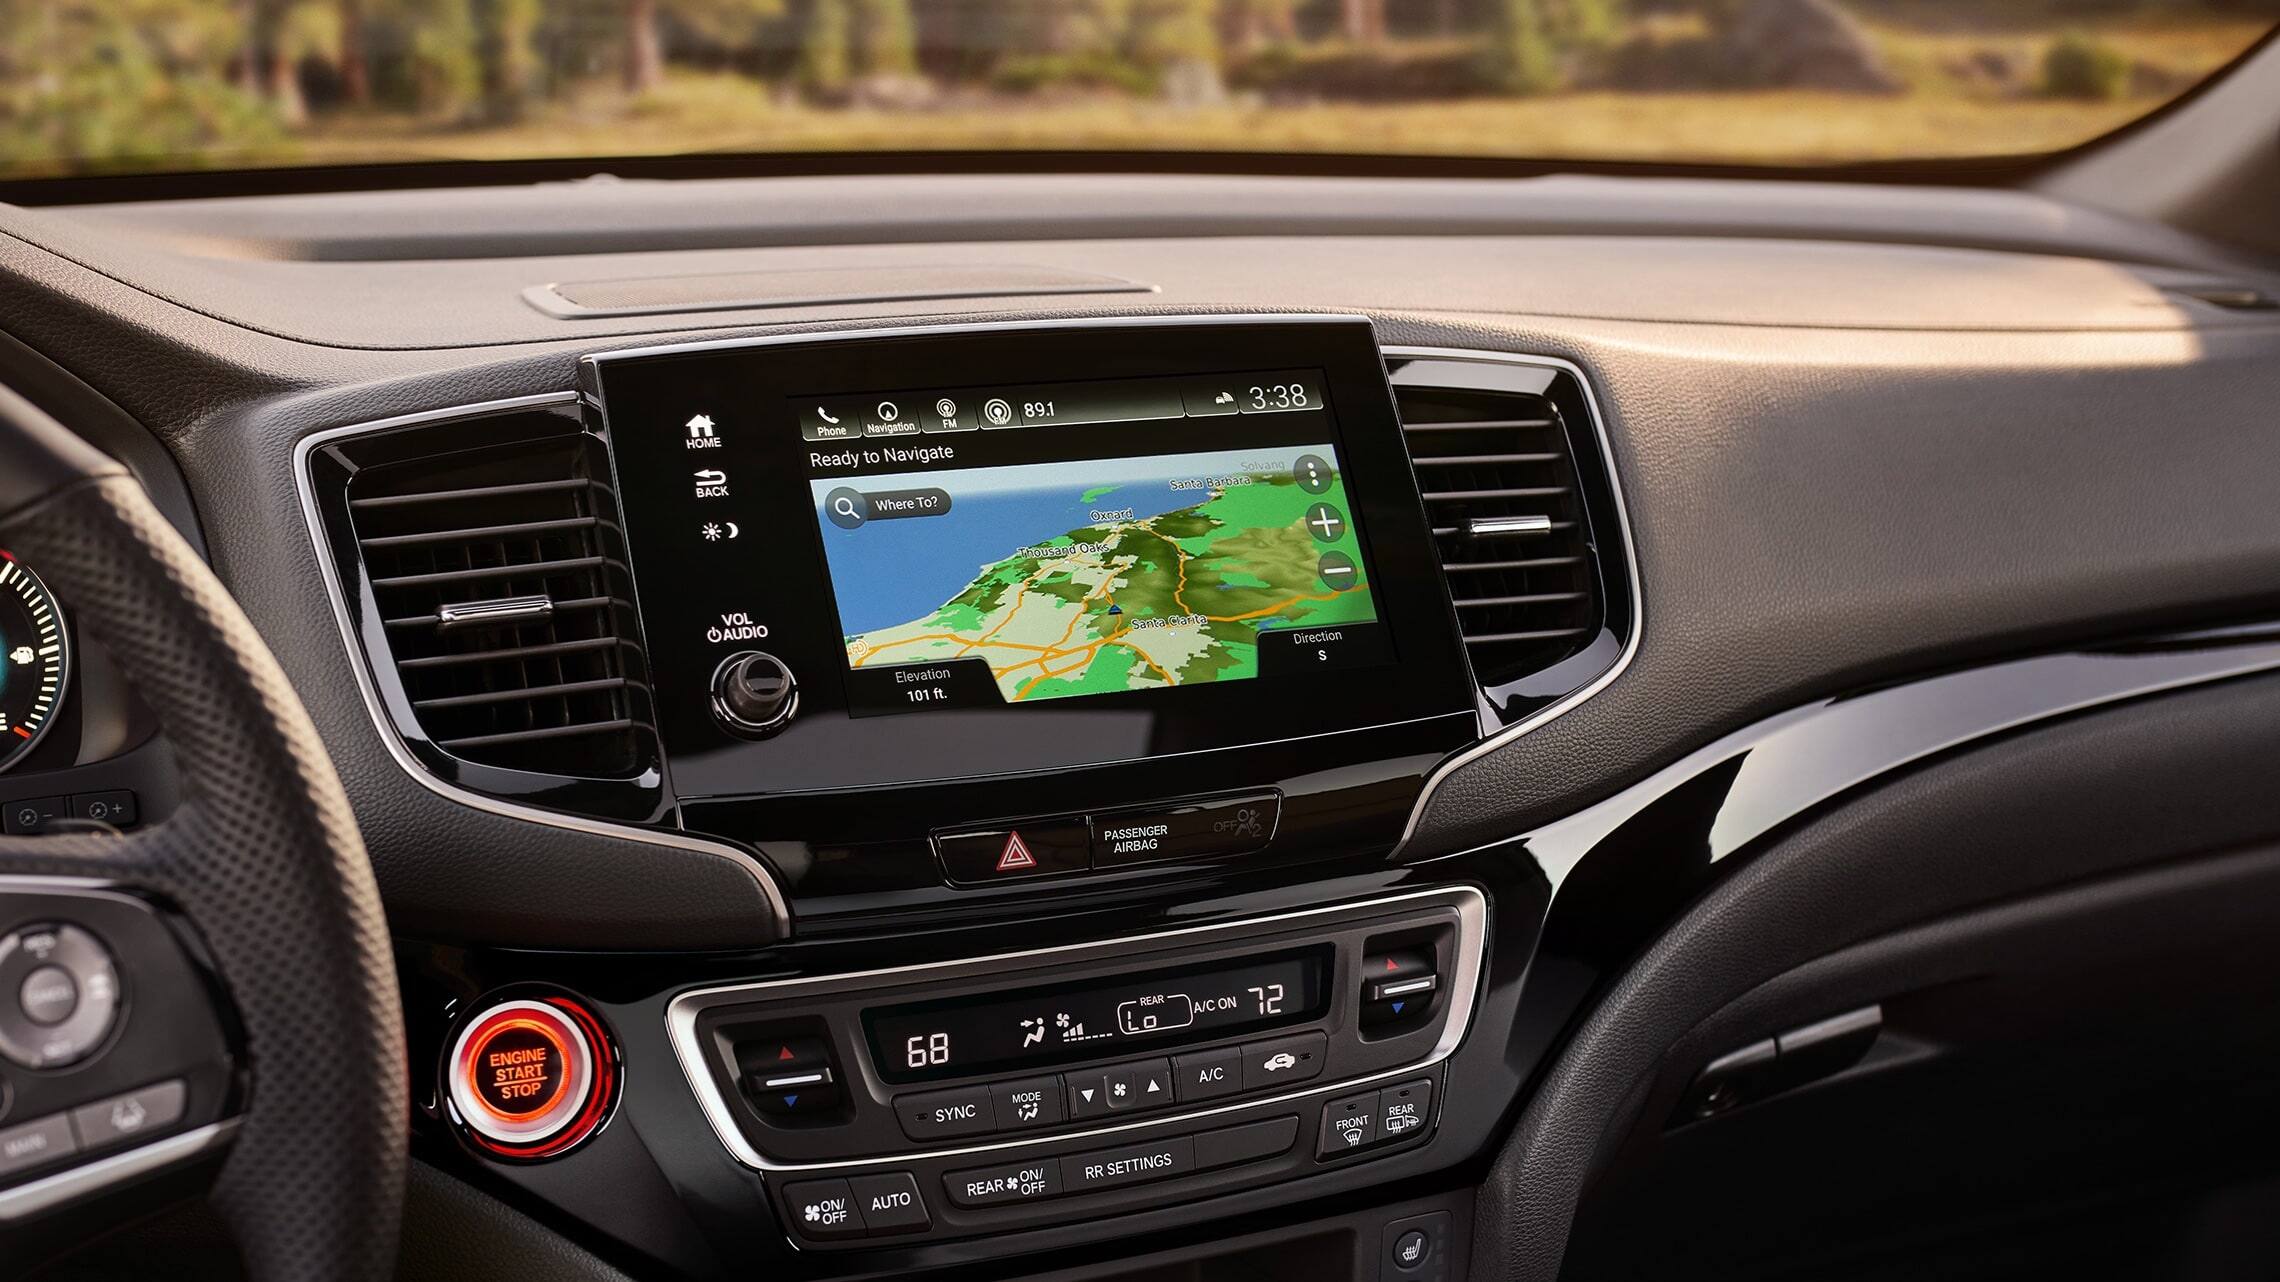 2019 Honda Passport featuring the Honda Satellite-Linked Navigation System™ touch- screen.